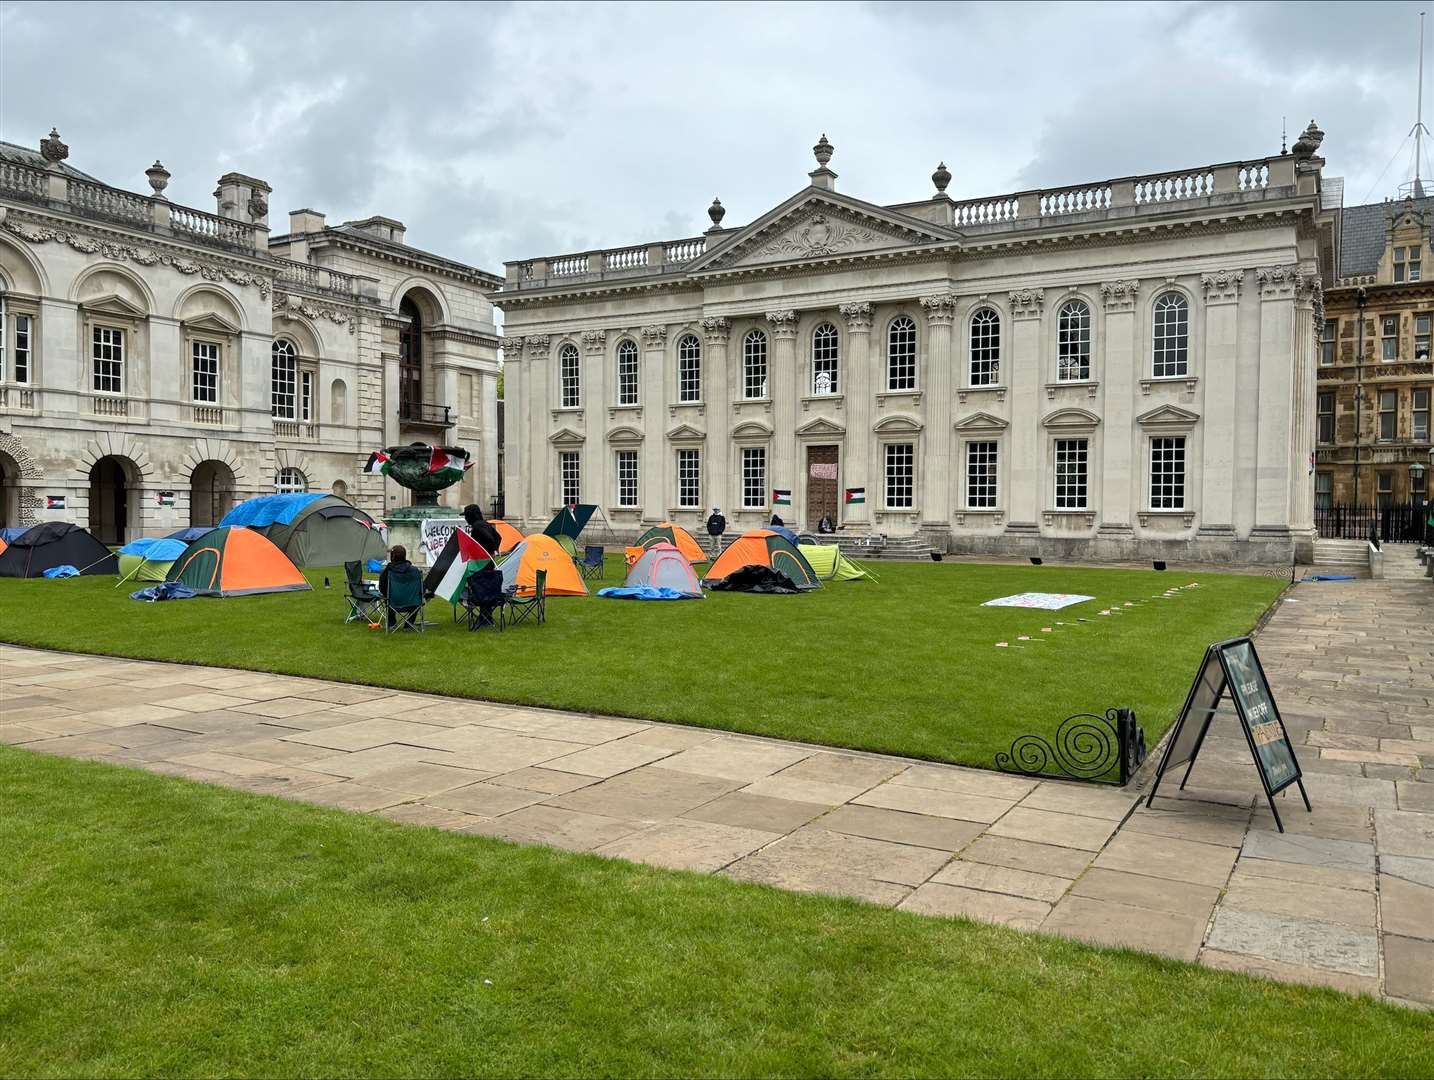 A protest encampment was set up outside Senate House at Cambridge University (Sam Russell/PA)